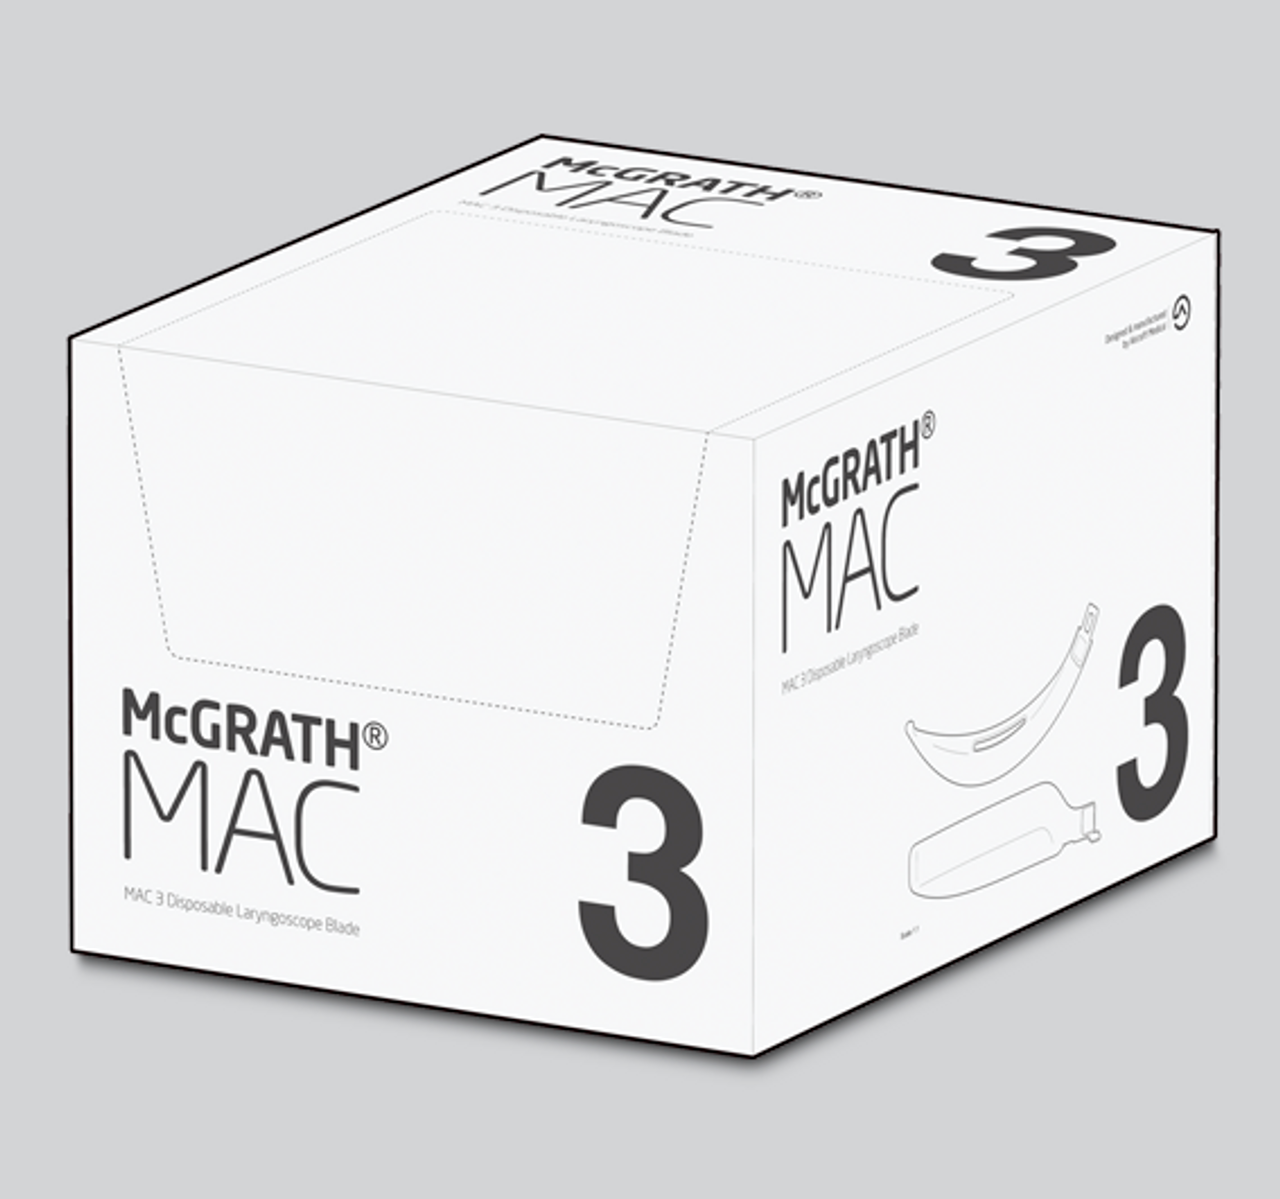 McGRATH® MAC 3 Disposable Laryngoscope Blade - Stryker Corporation ...